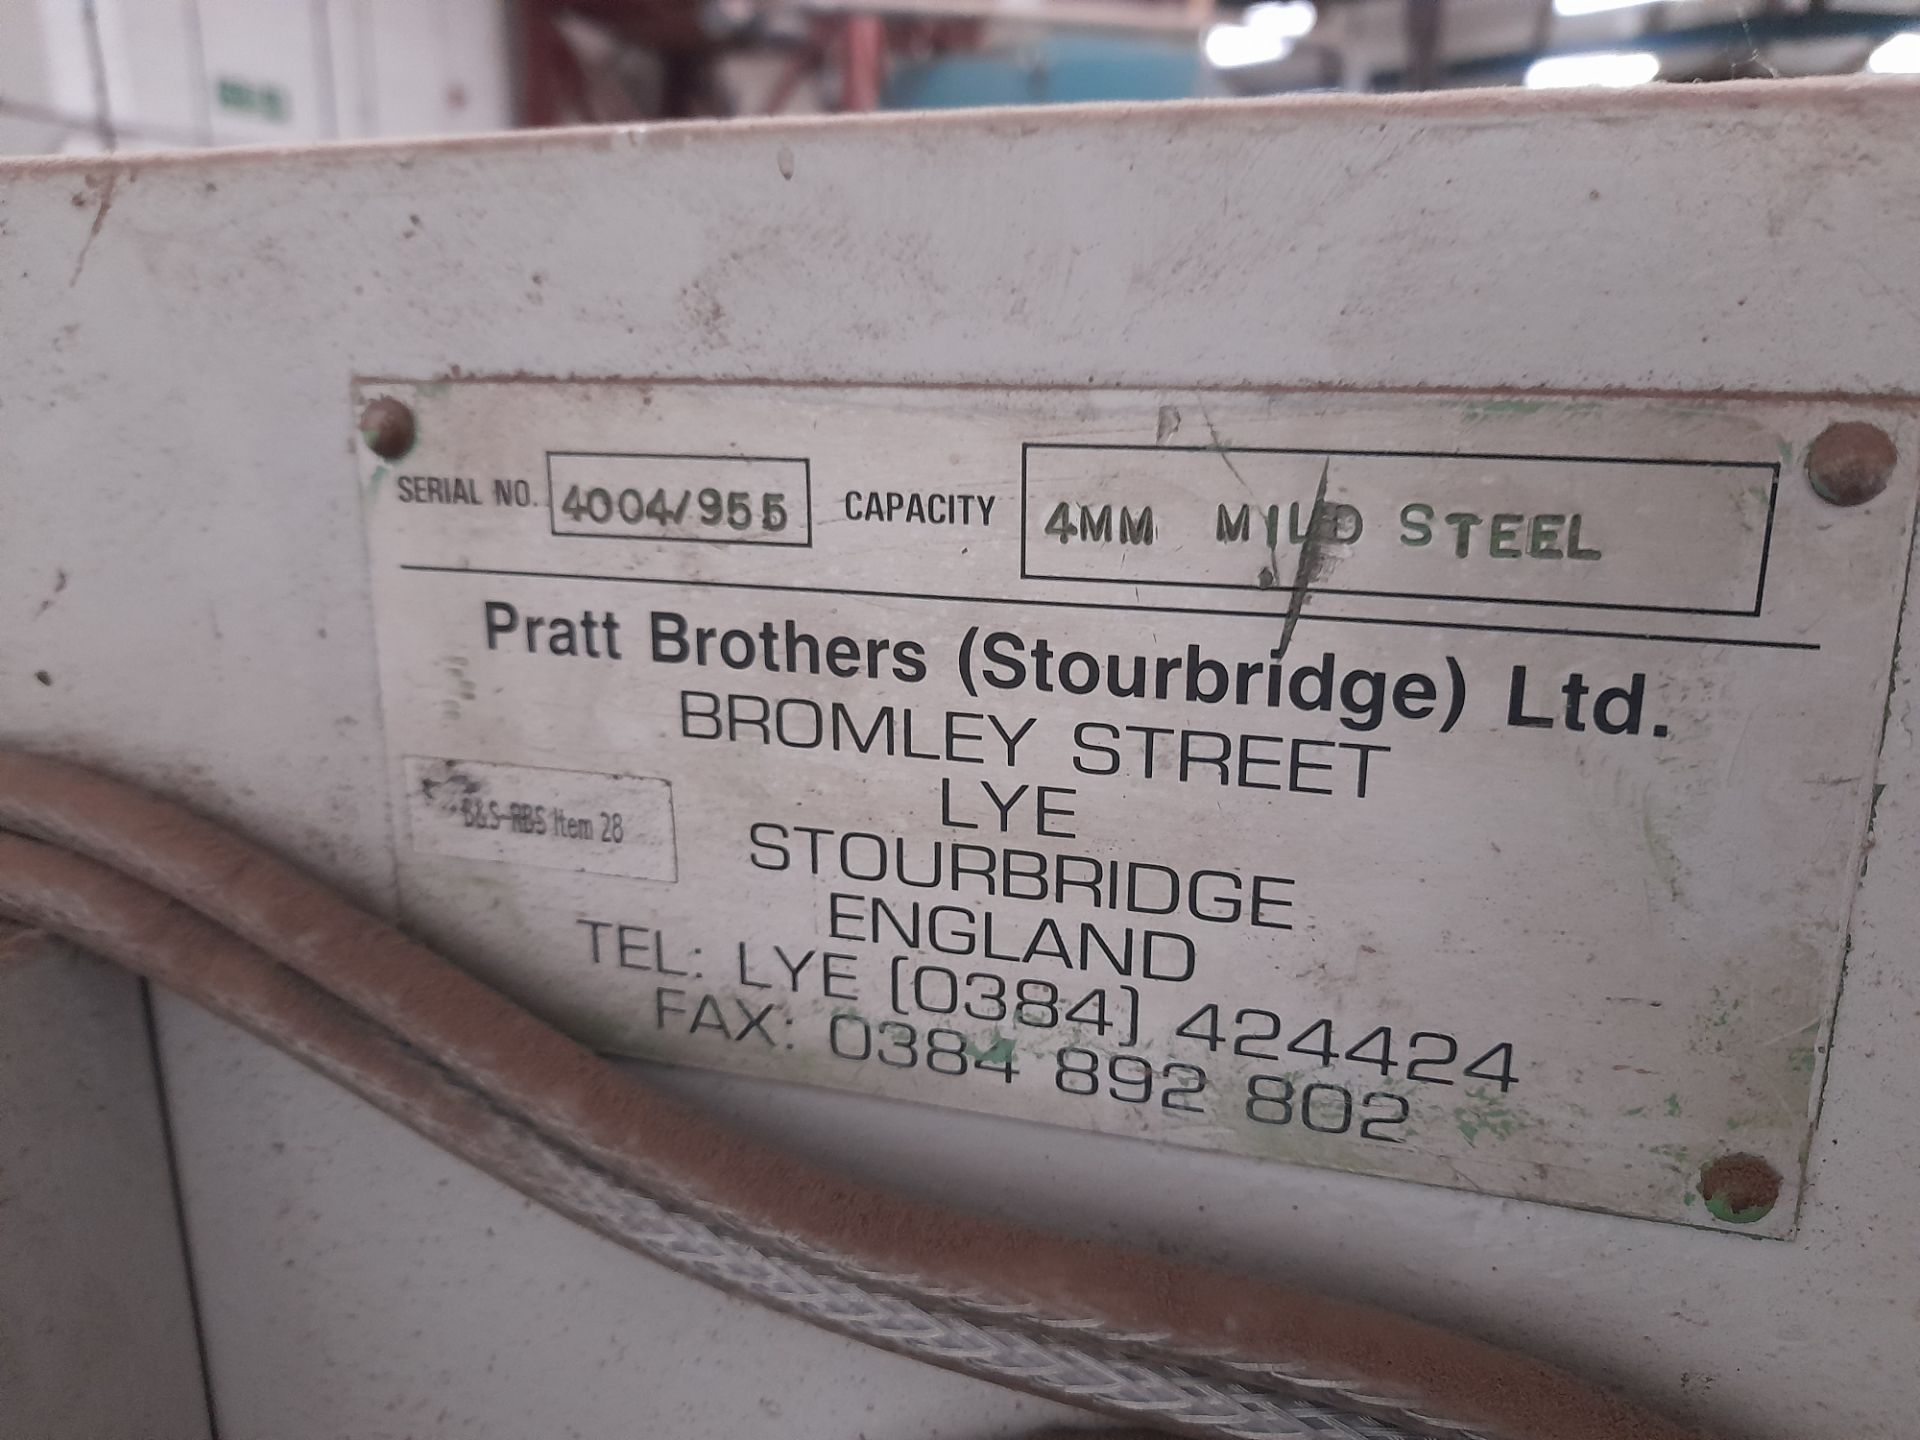 Pratt Brothers Mechanical guillotine (Capacity 4mm / Mild steel, Serial Number 4004/955), Risk - Image 3 of 5